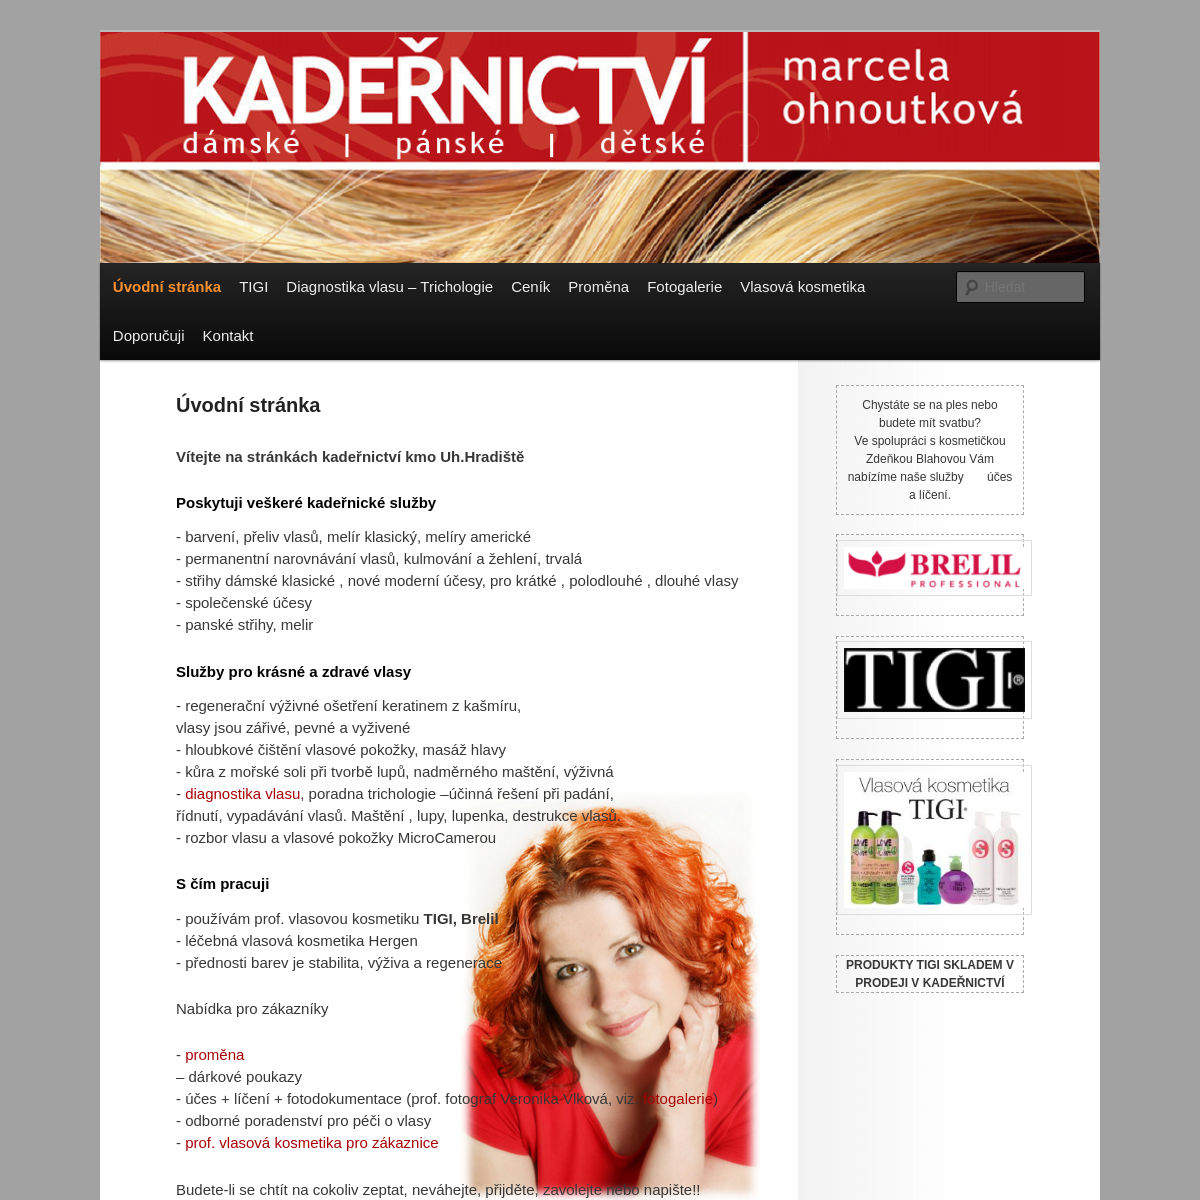 A complete backup of kadernictvimo.cz